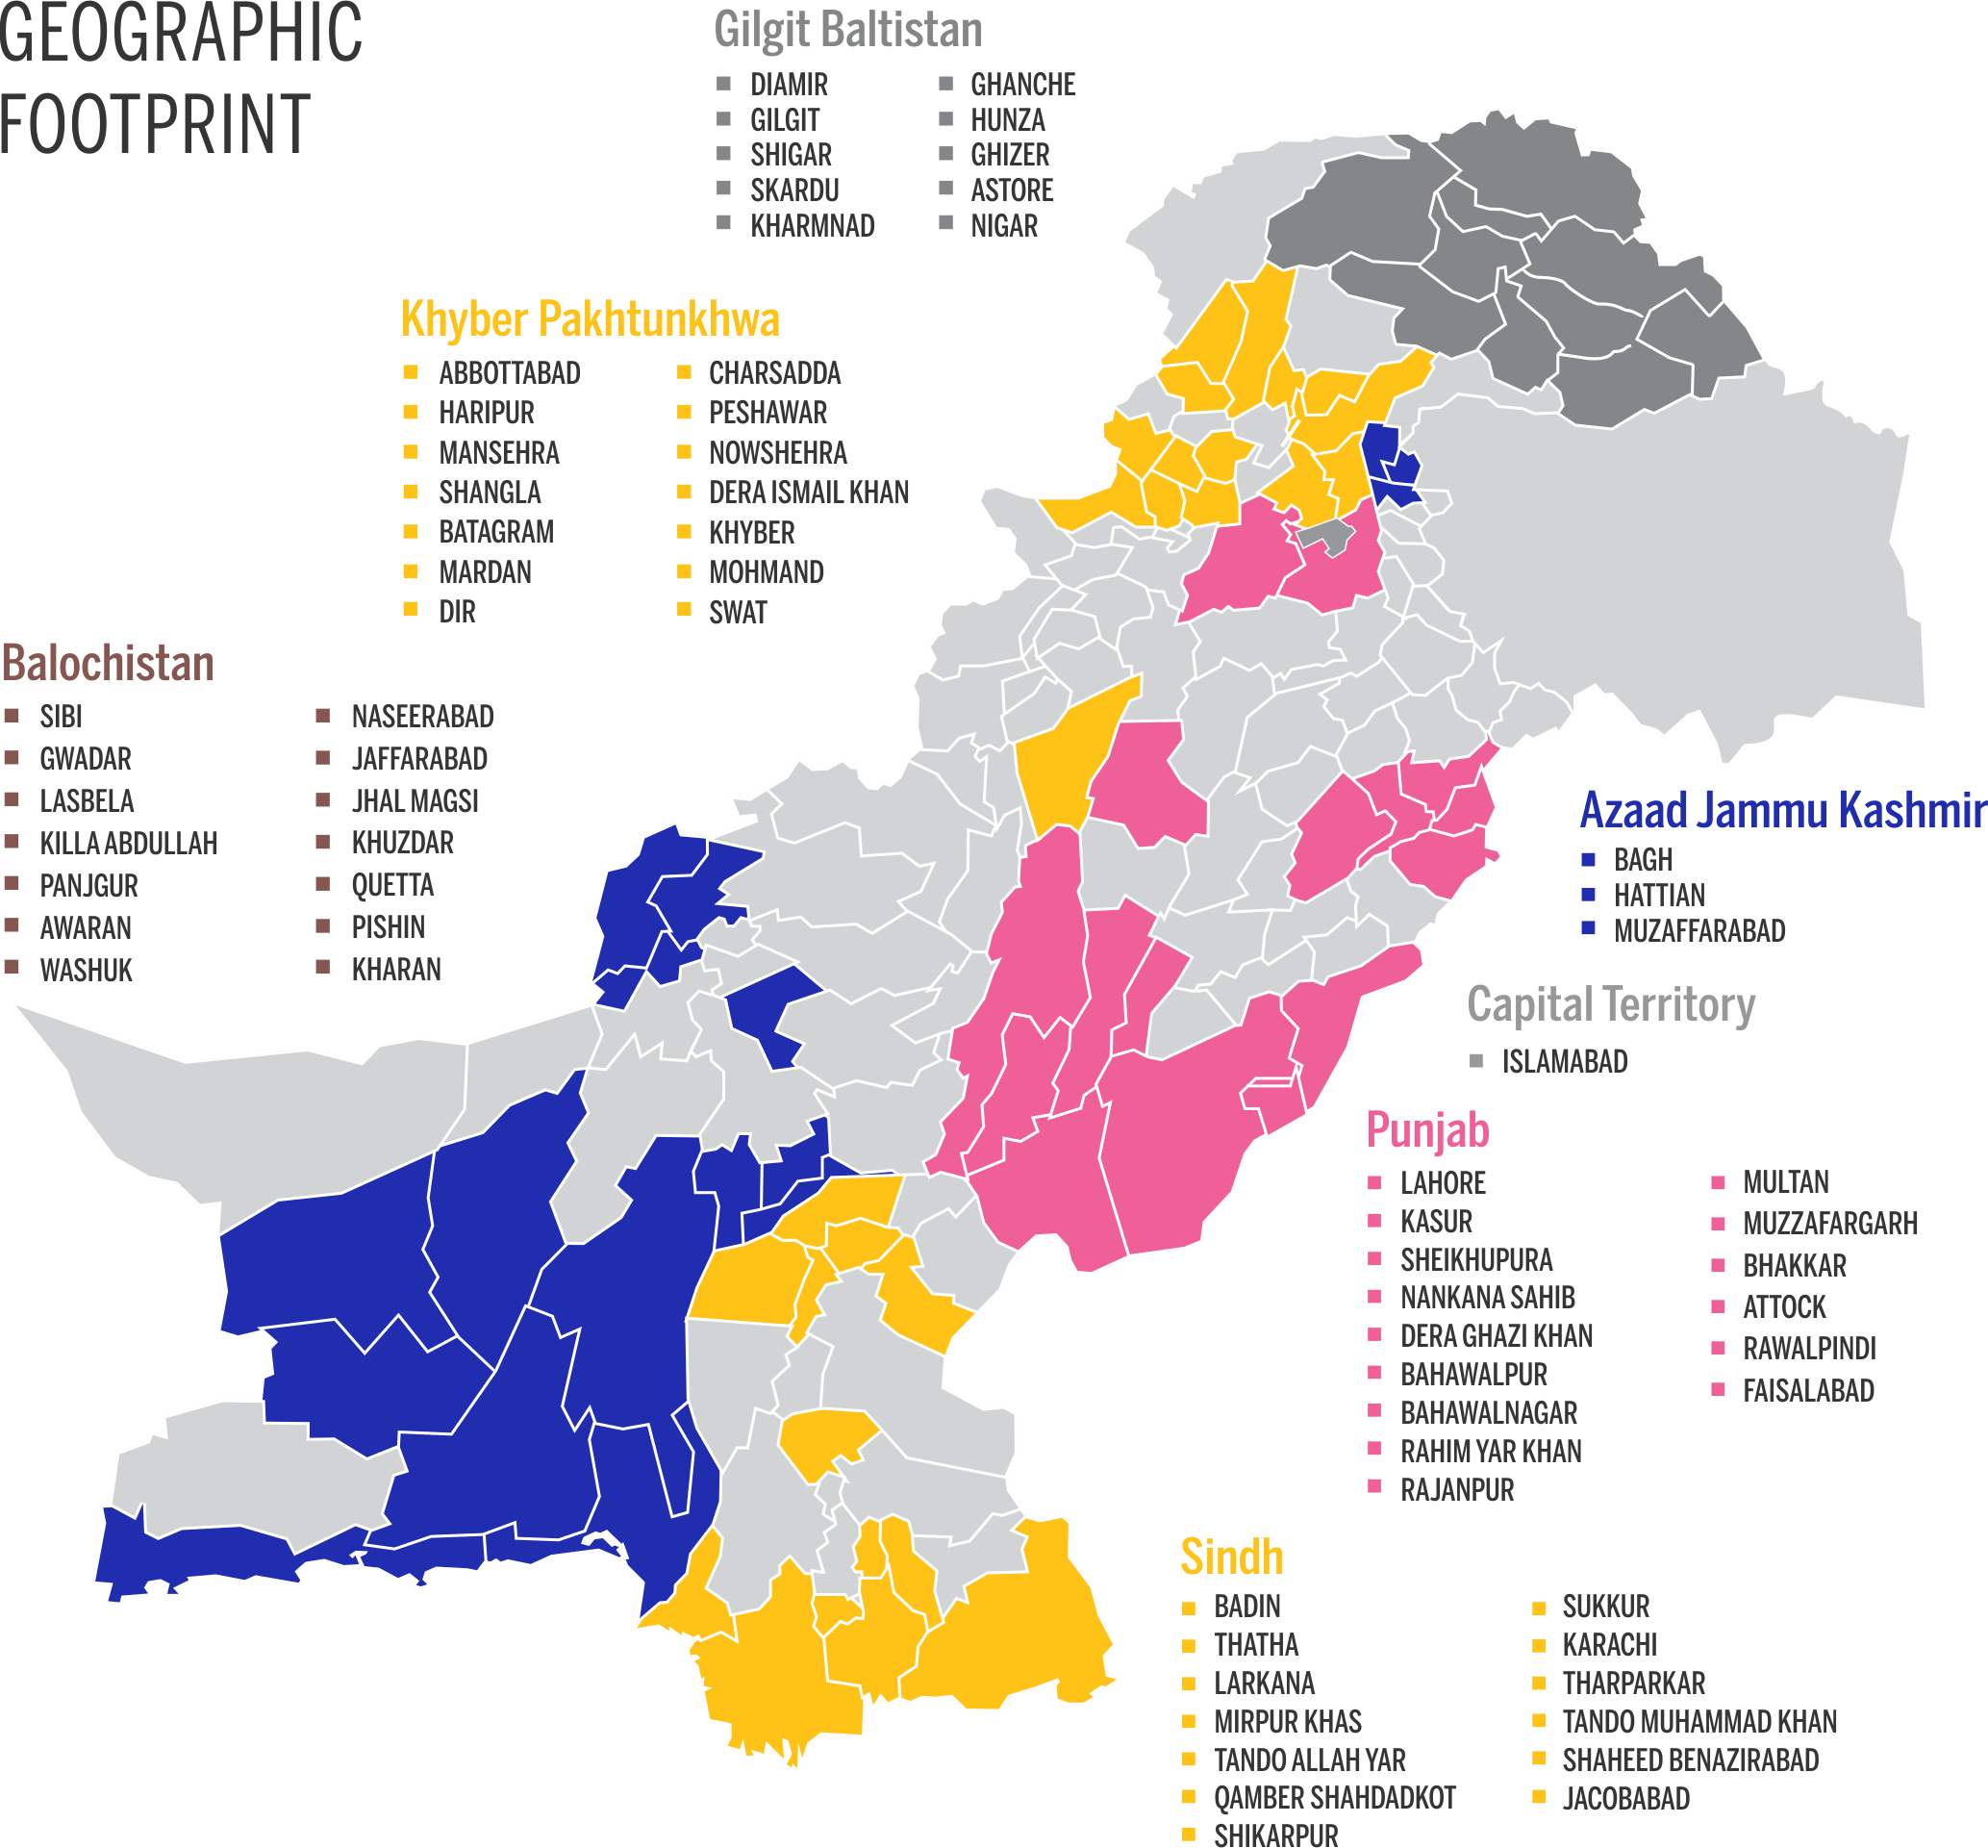 Alight Pakistan Geographic Footprint